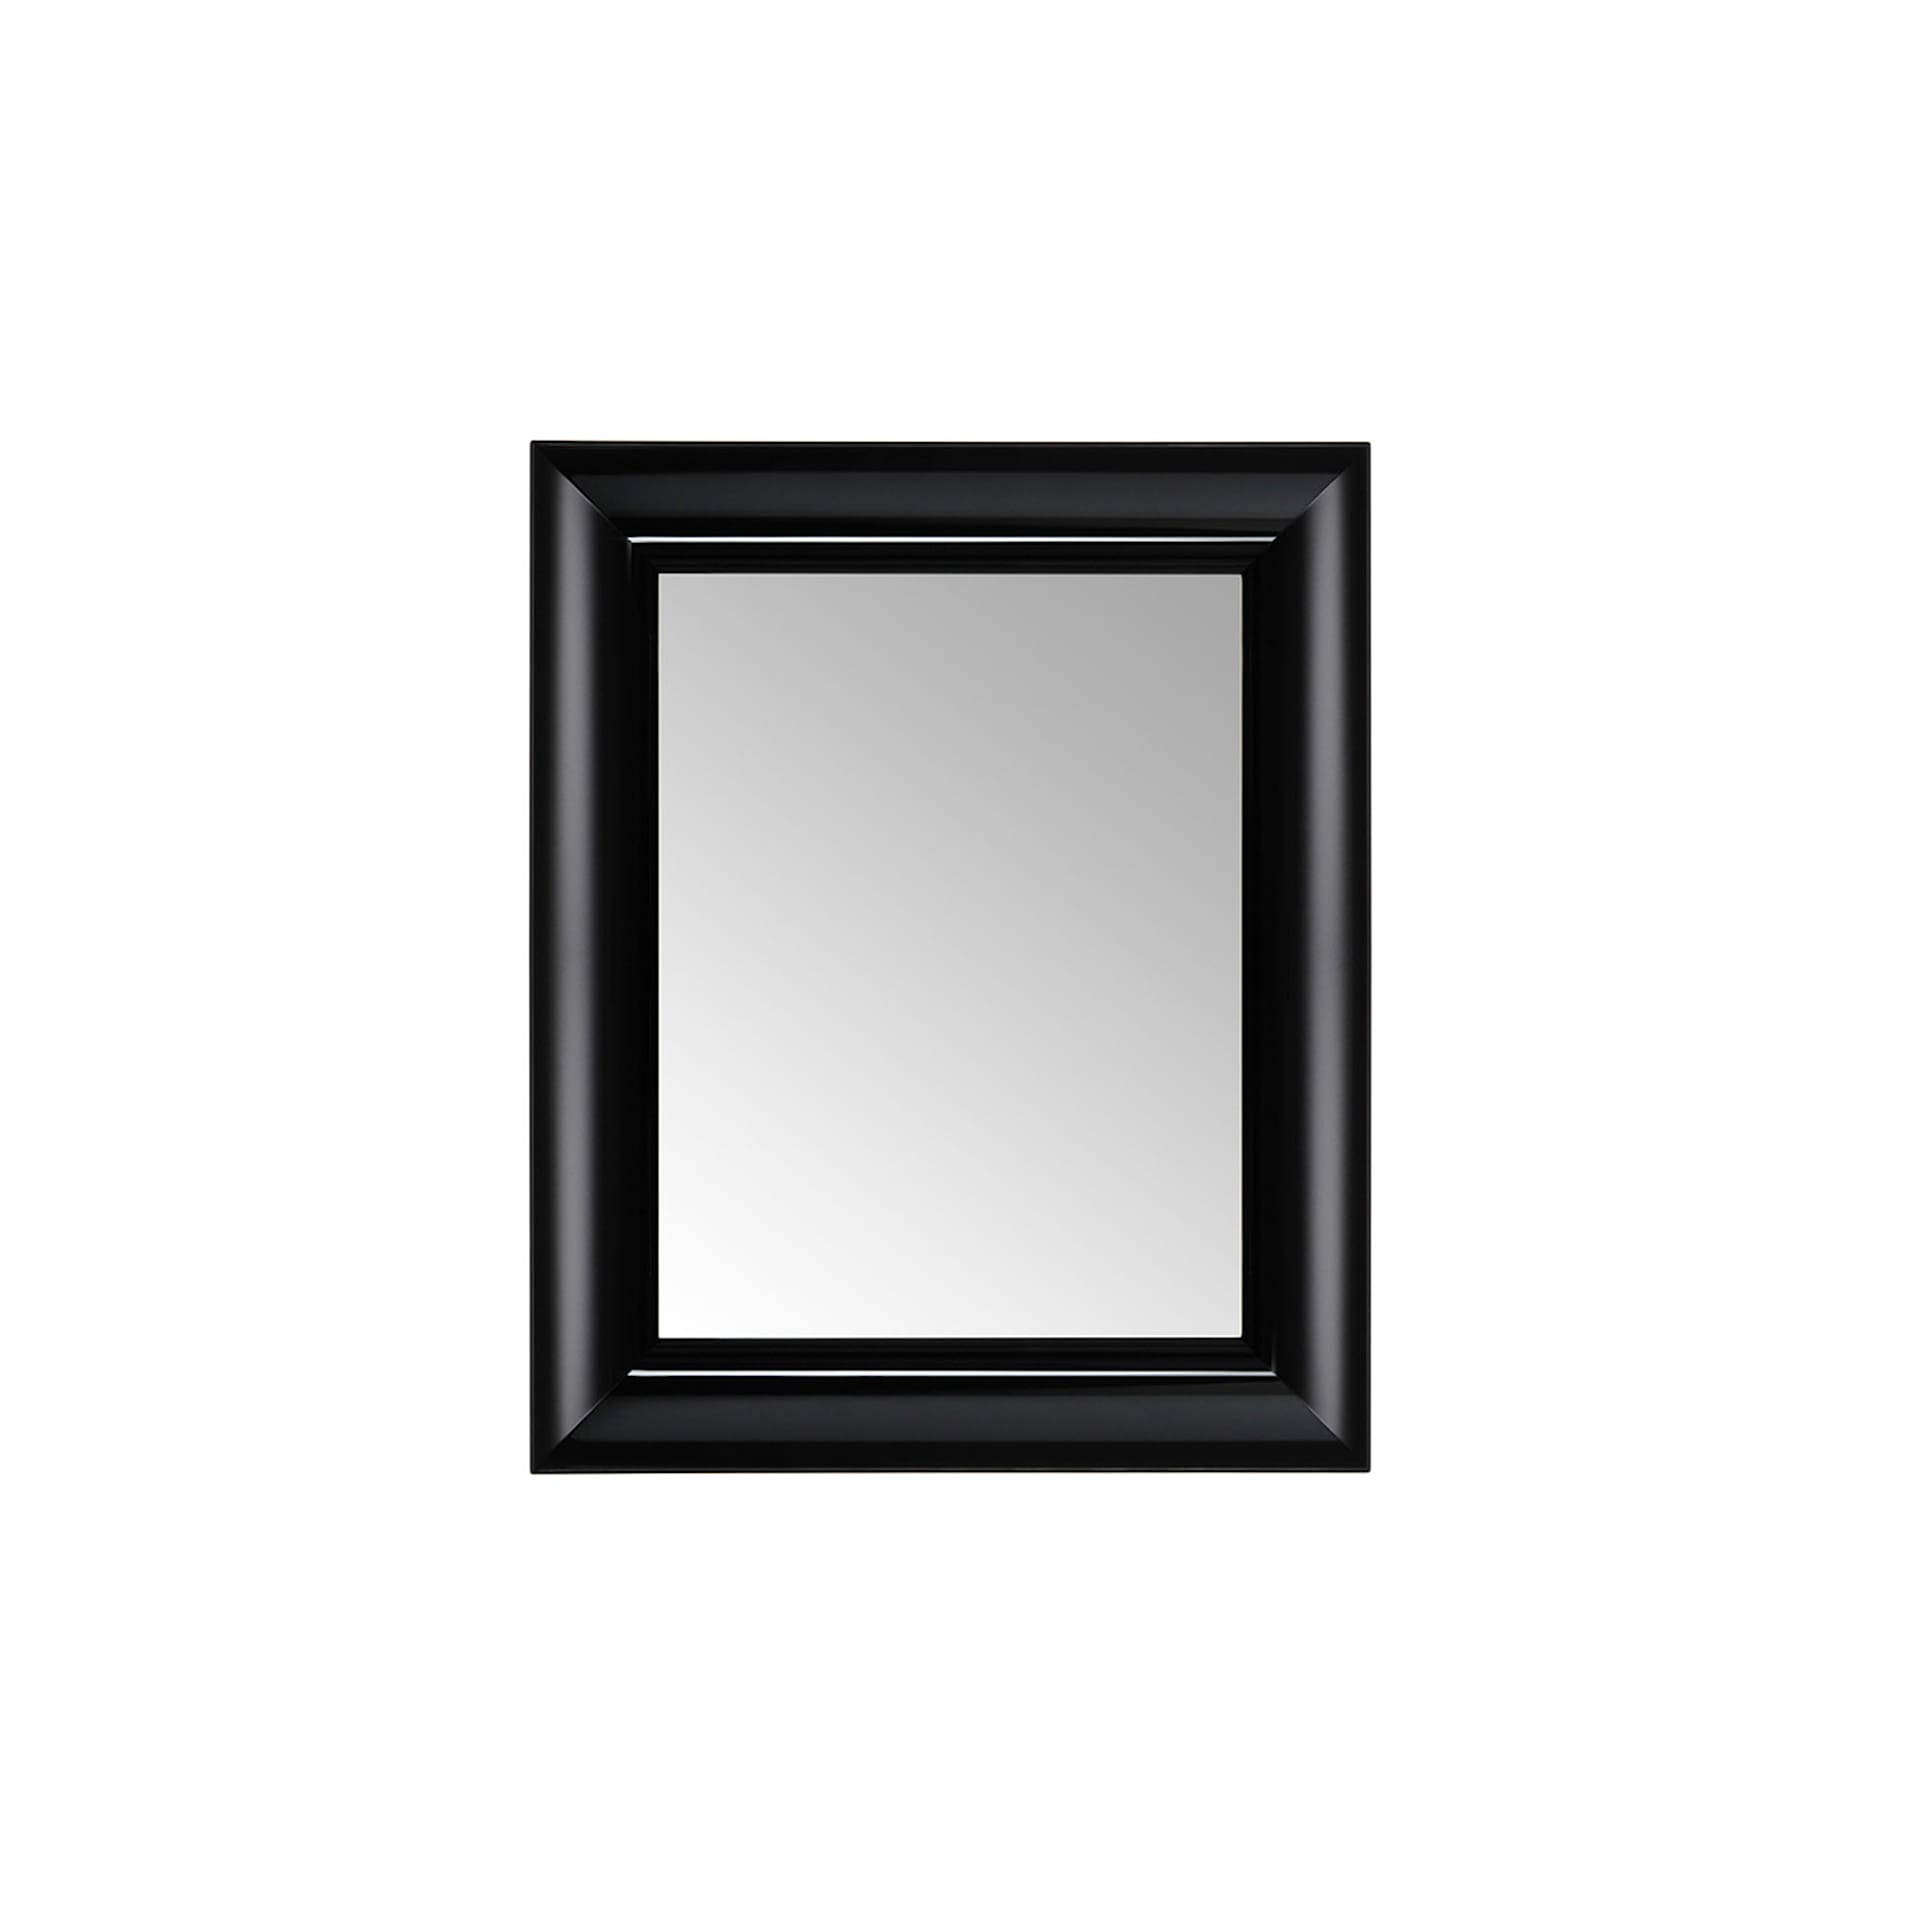 Francois Ghost Mirror 79 x 65 cm - Kartell - Philippe Starck - NO GA